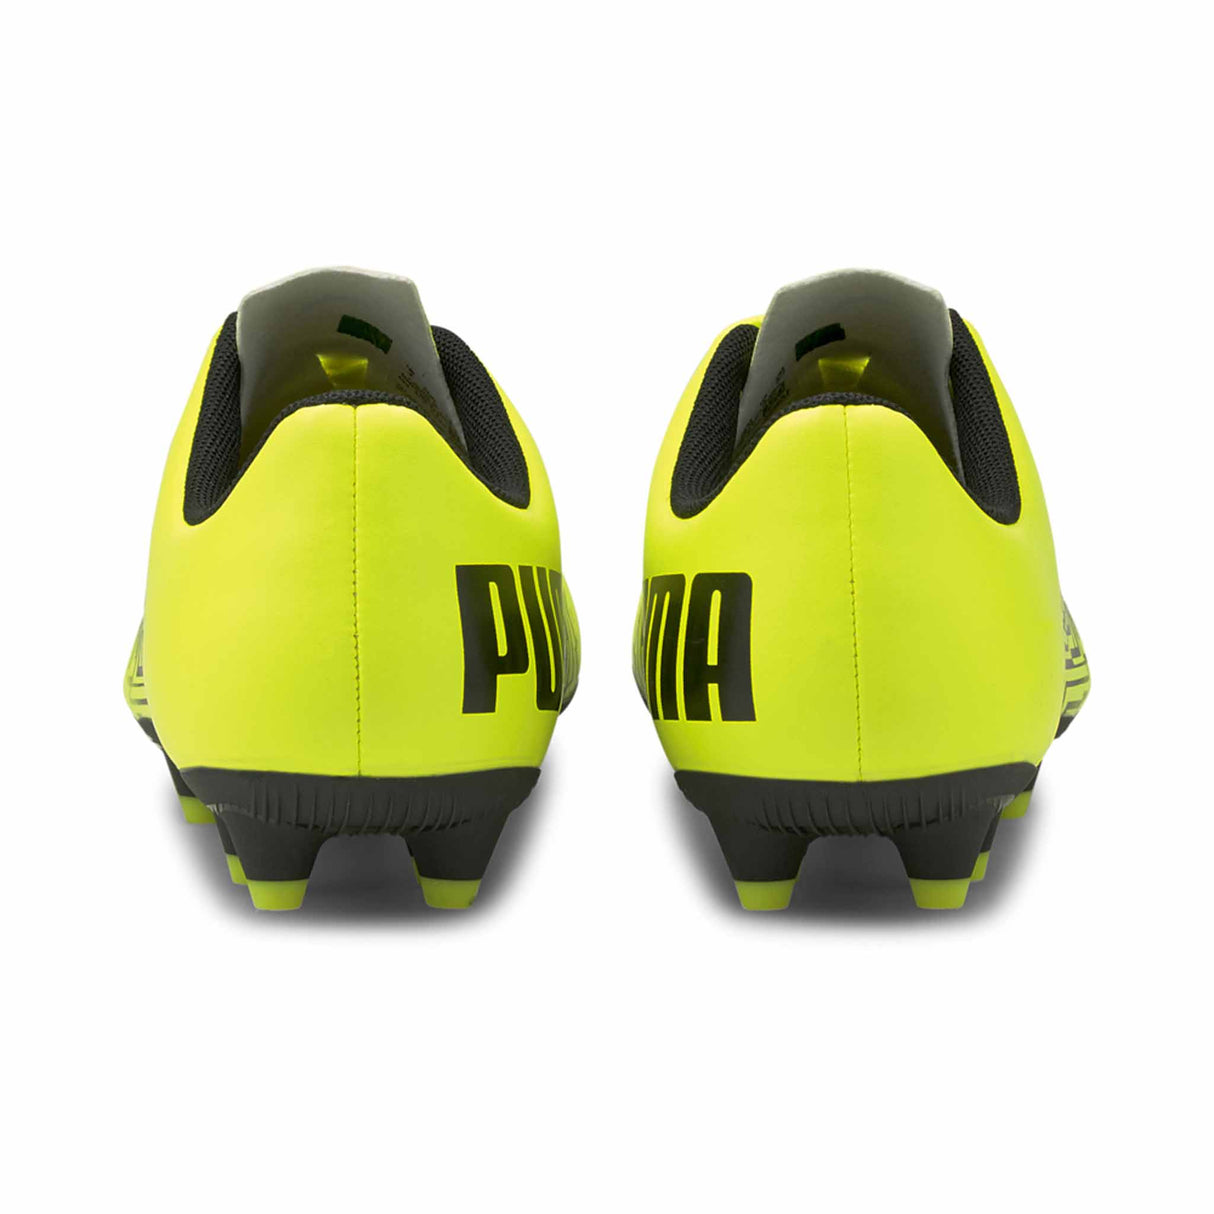 Puma Tacto FG/AG Junior chaussures de soccer enfant Jaune / Noir vue de dos